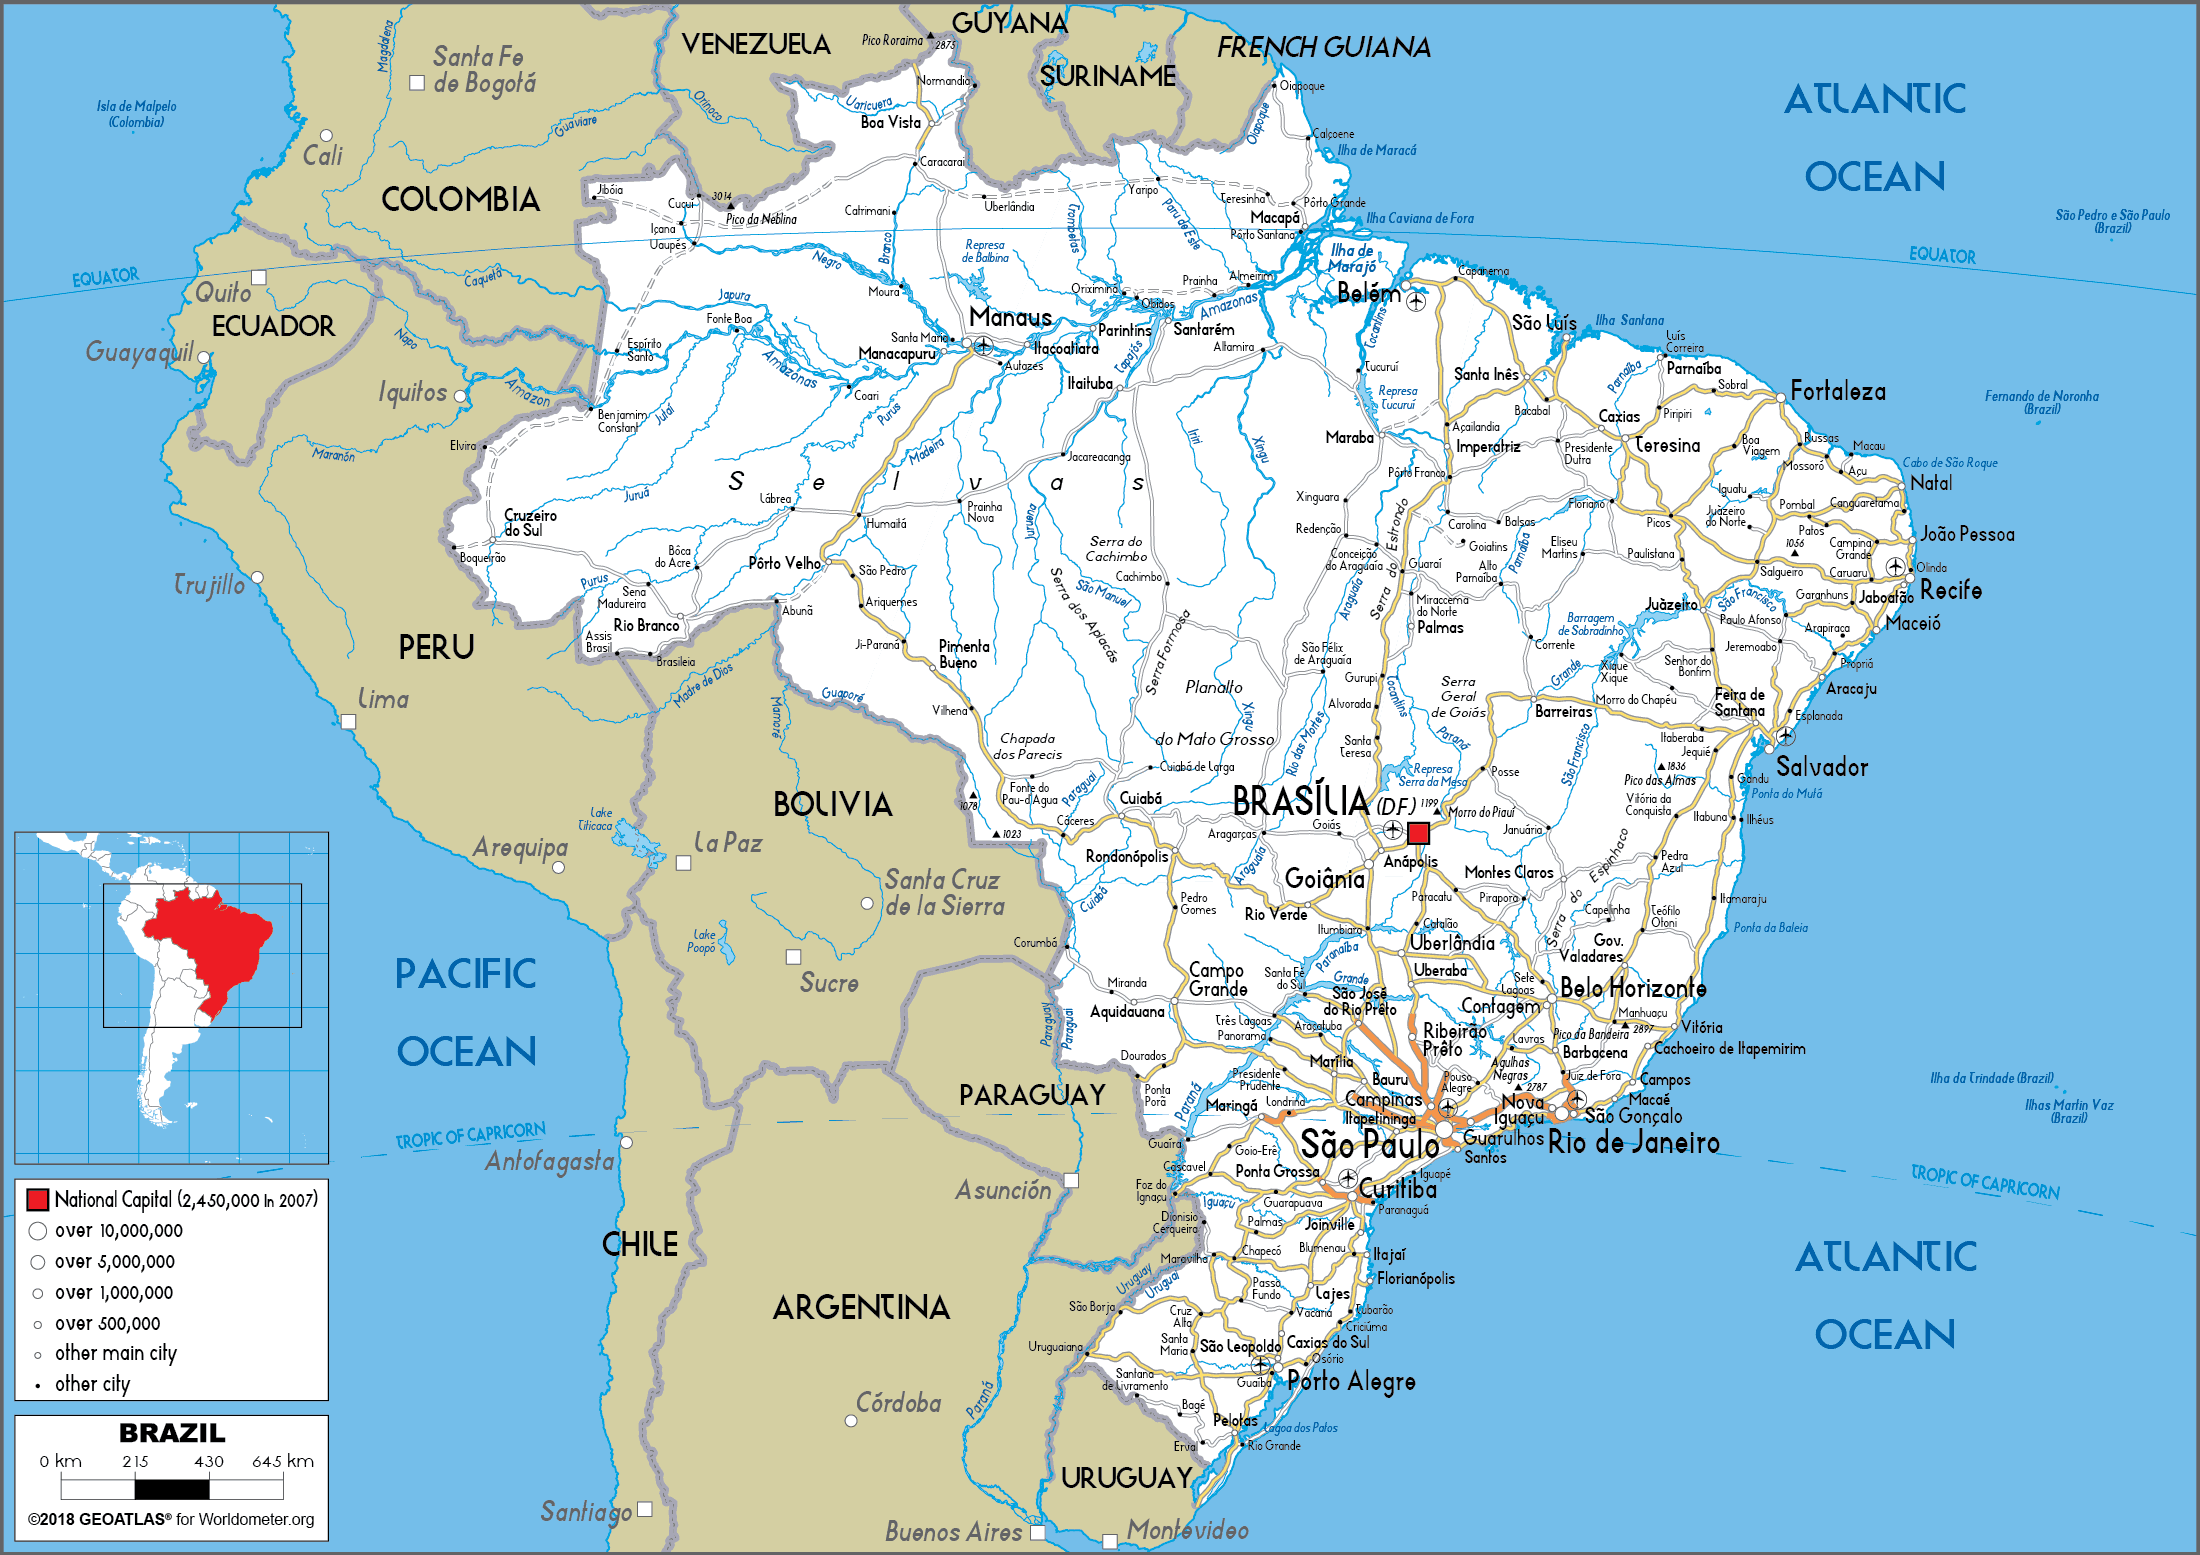 a map of brazil Brazil Map Road Worldometer a map of brazil